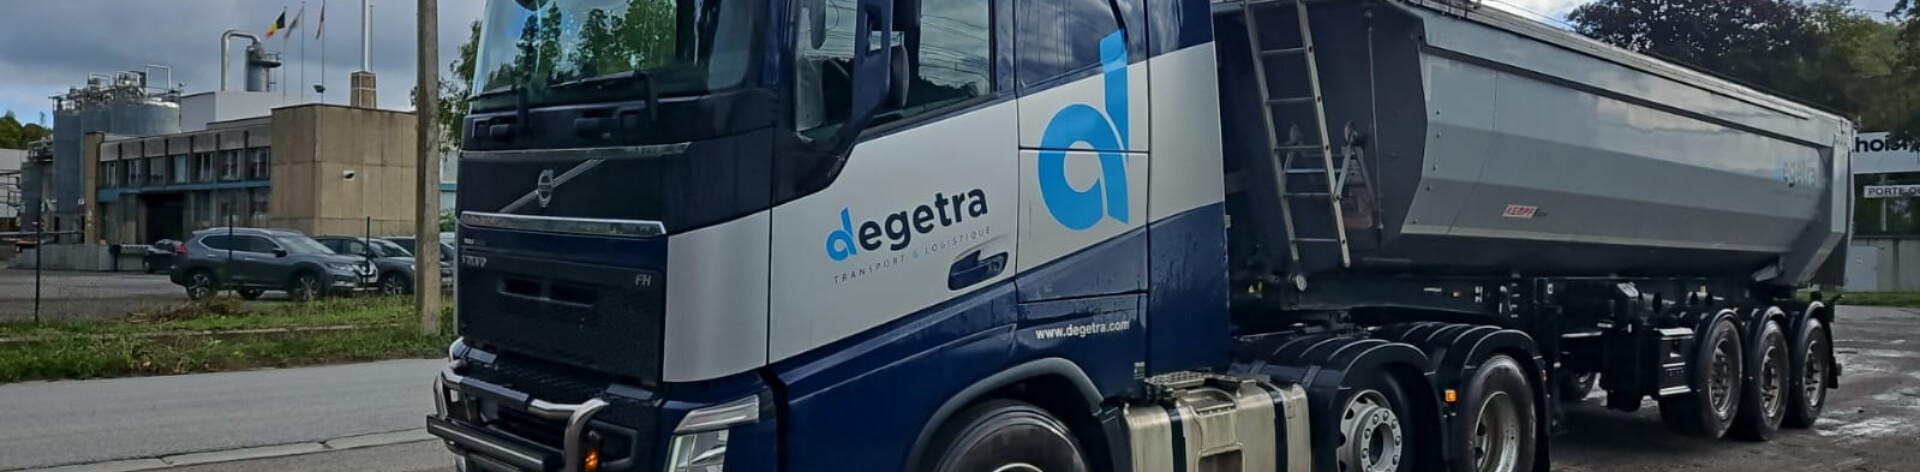 Transport et manutention - Degetra - photo 9